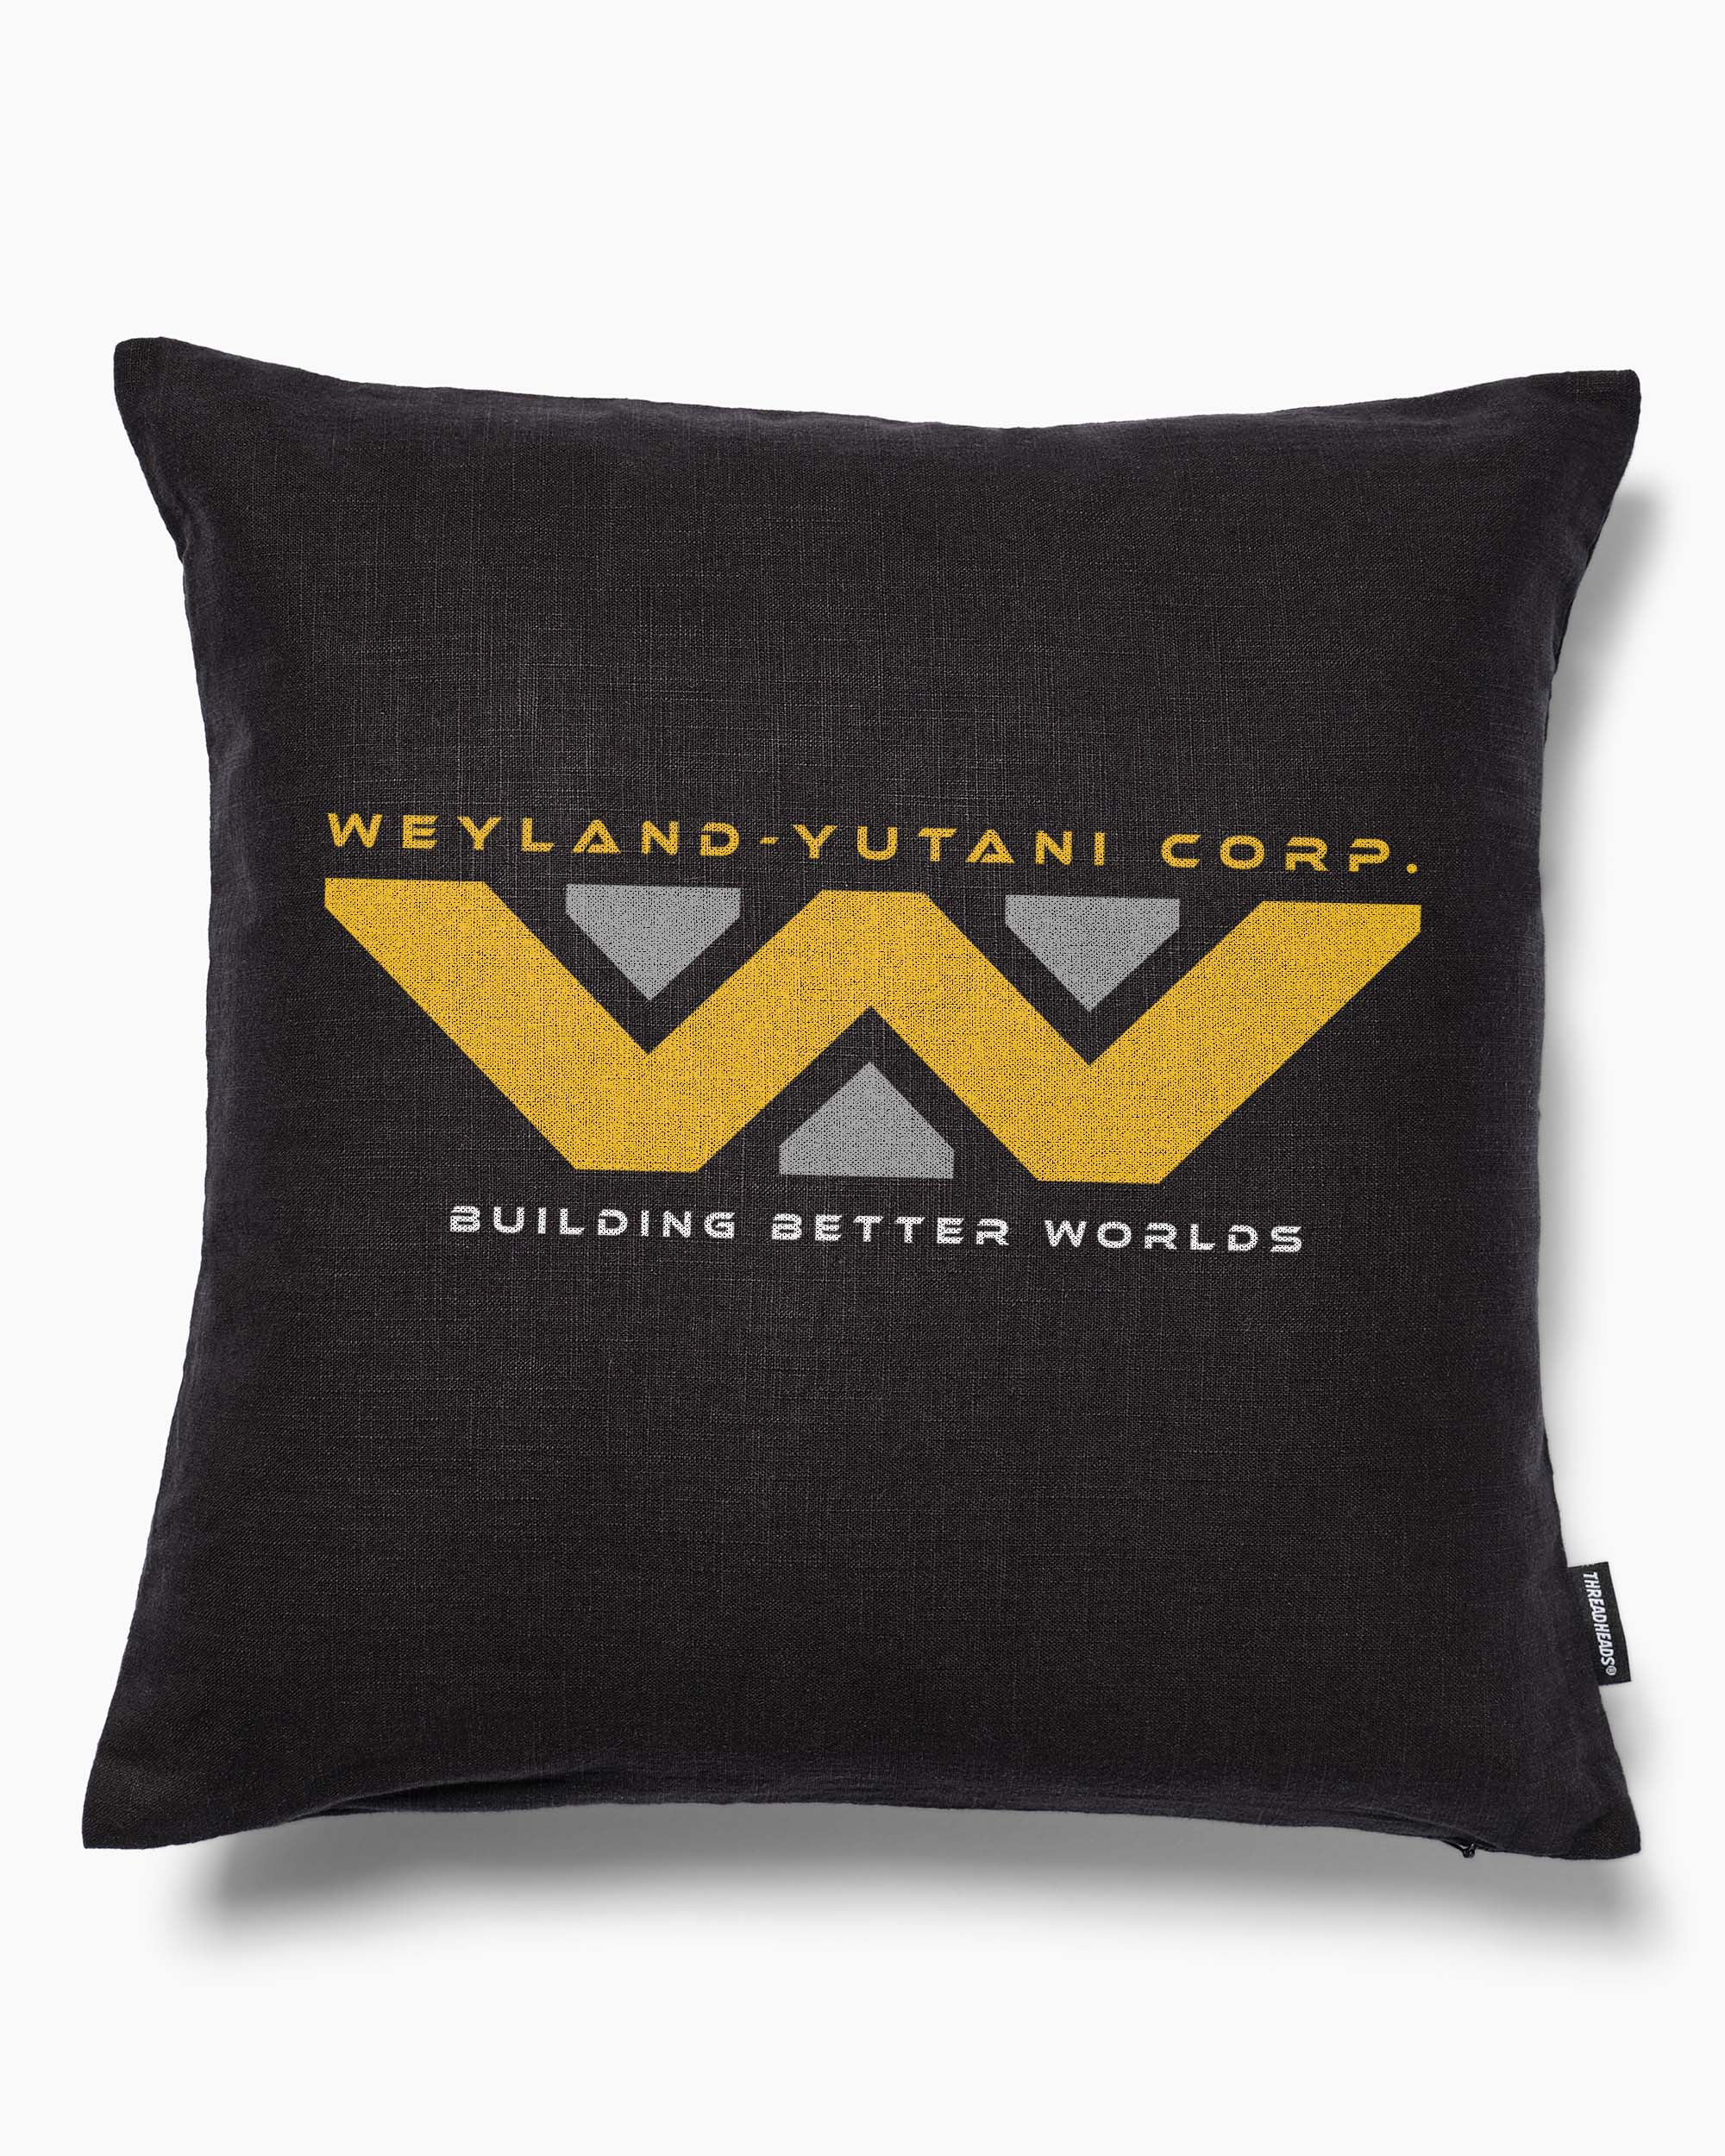 Weyland-Yutani Corp Cushion